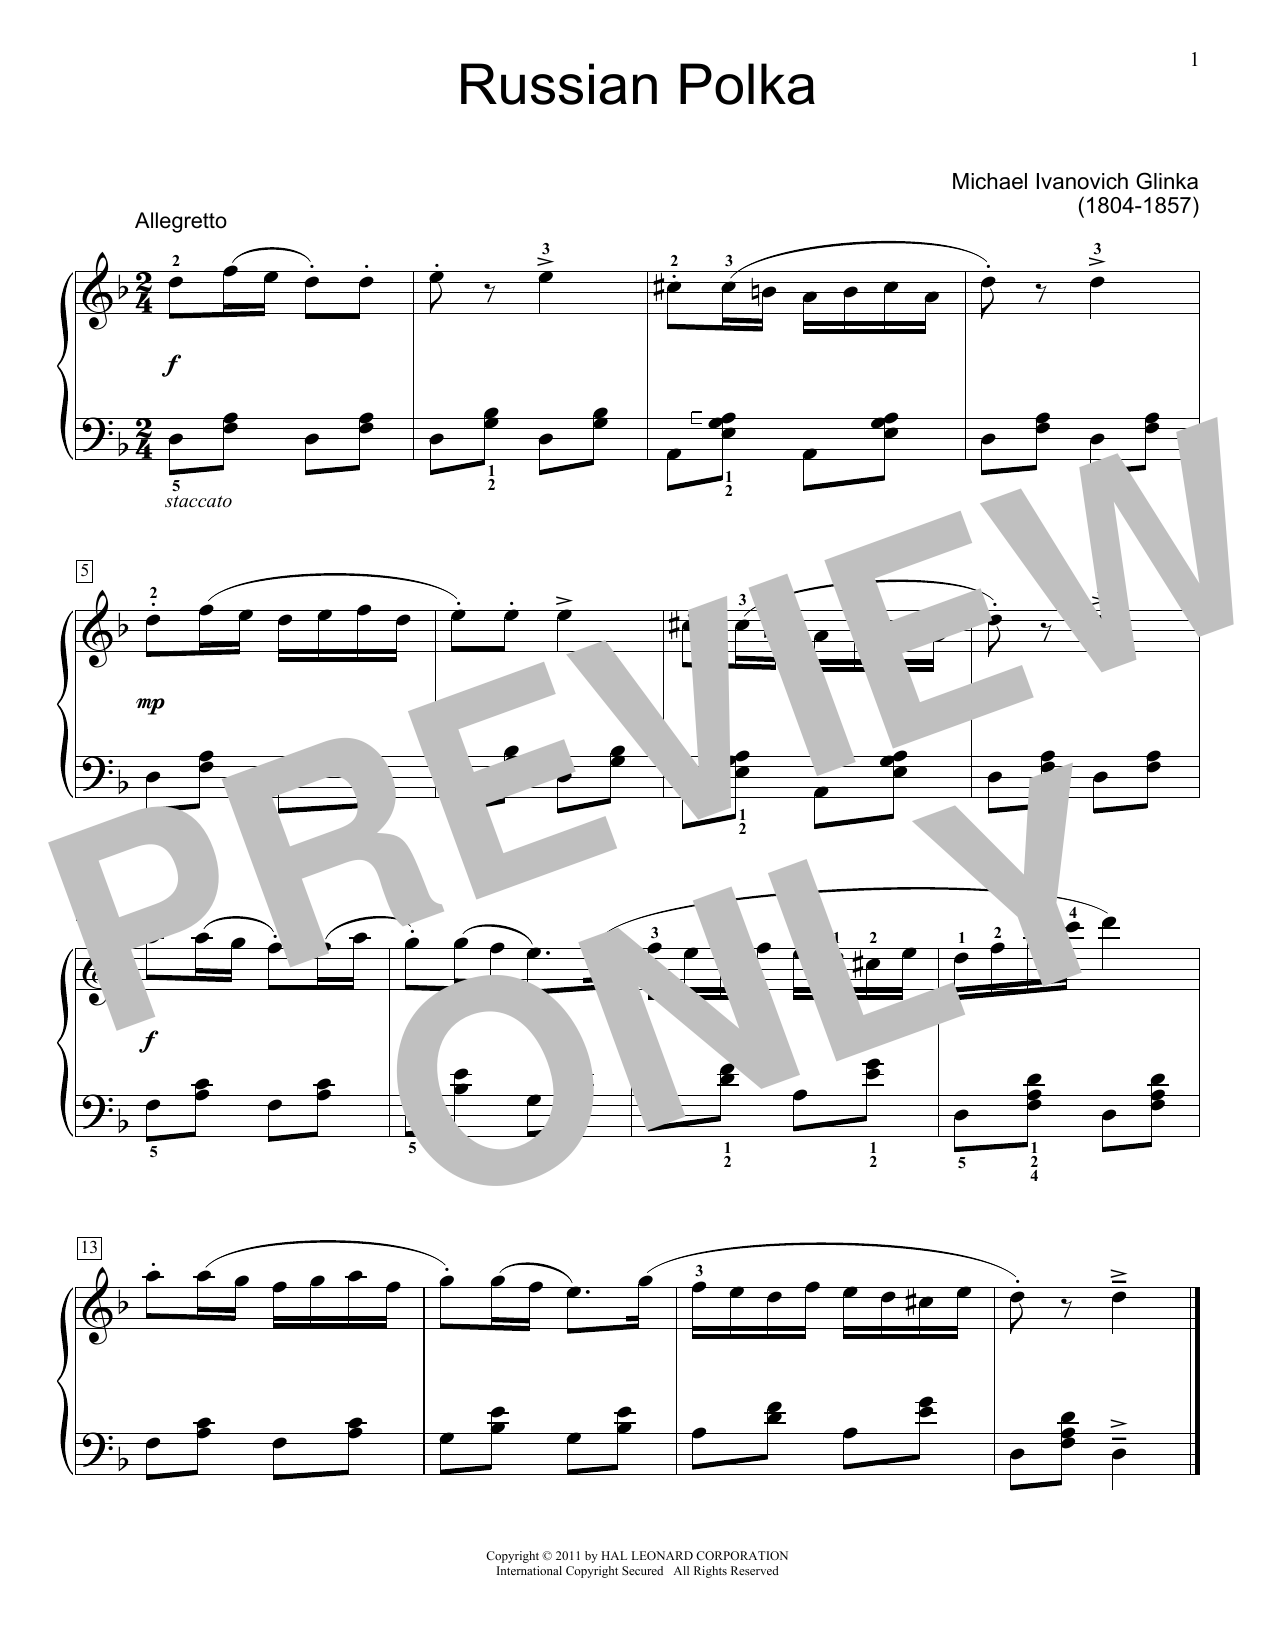 Mikhail Glinka Russian Polka Sheet Music Notes & Chords for Educational Piano - Download or Print PDF